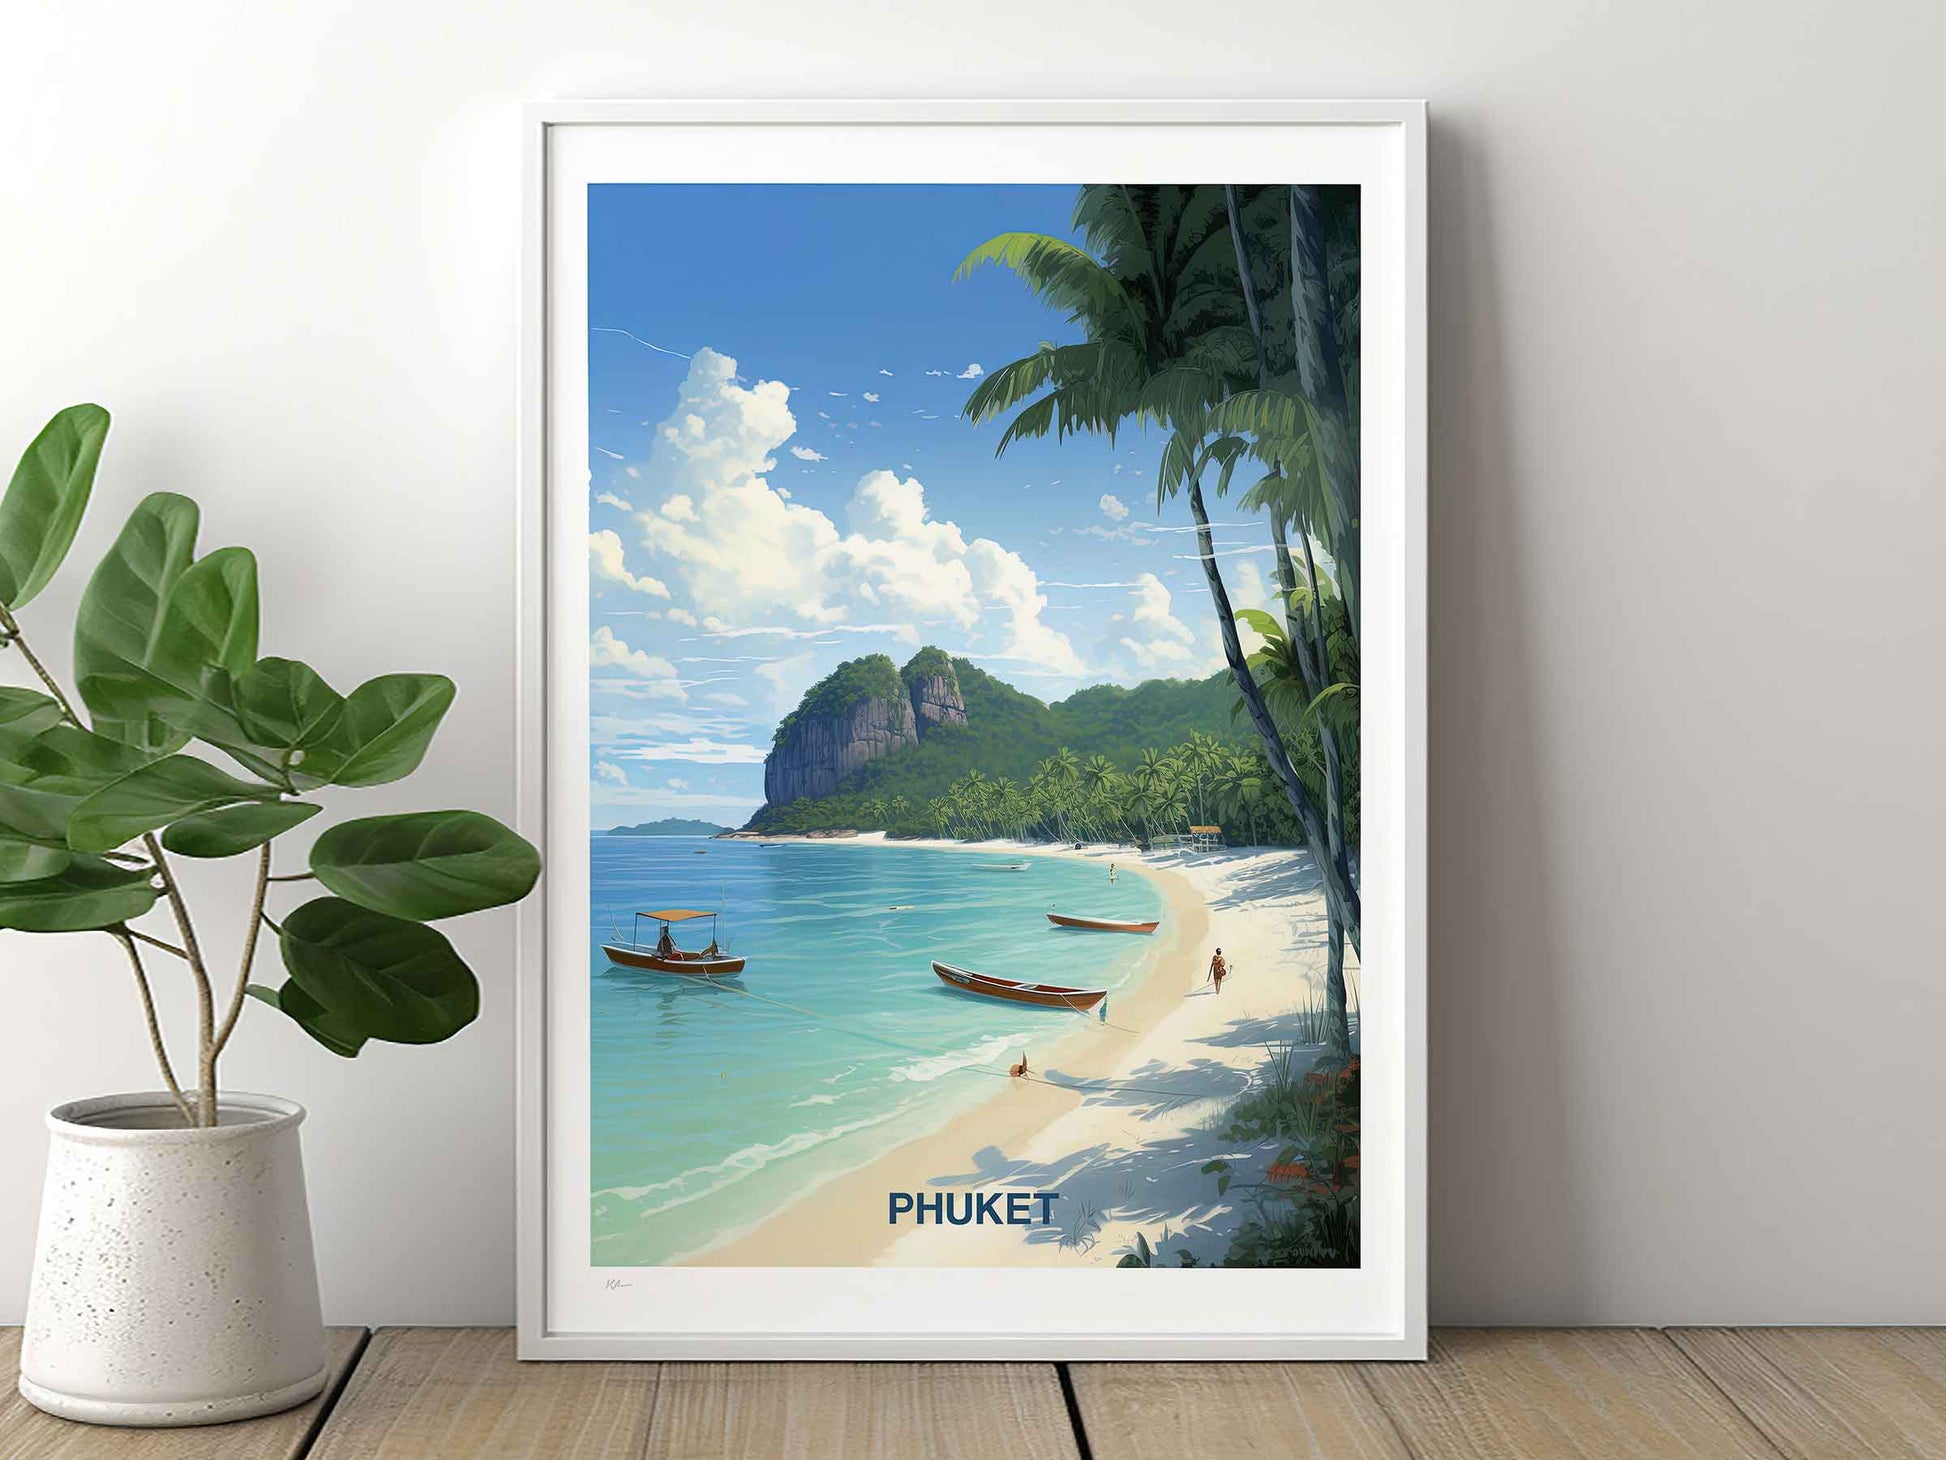 Framed Image of Phuket Thailand Wall Art Travel Poster Prints Illustration